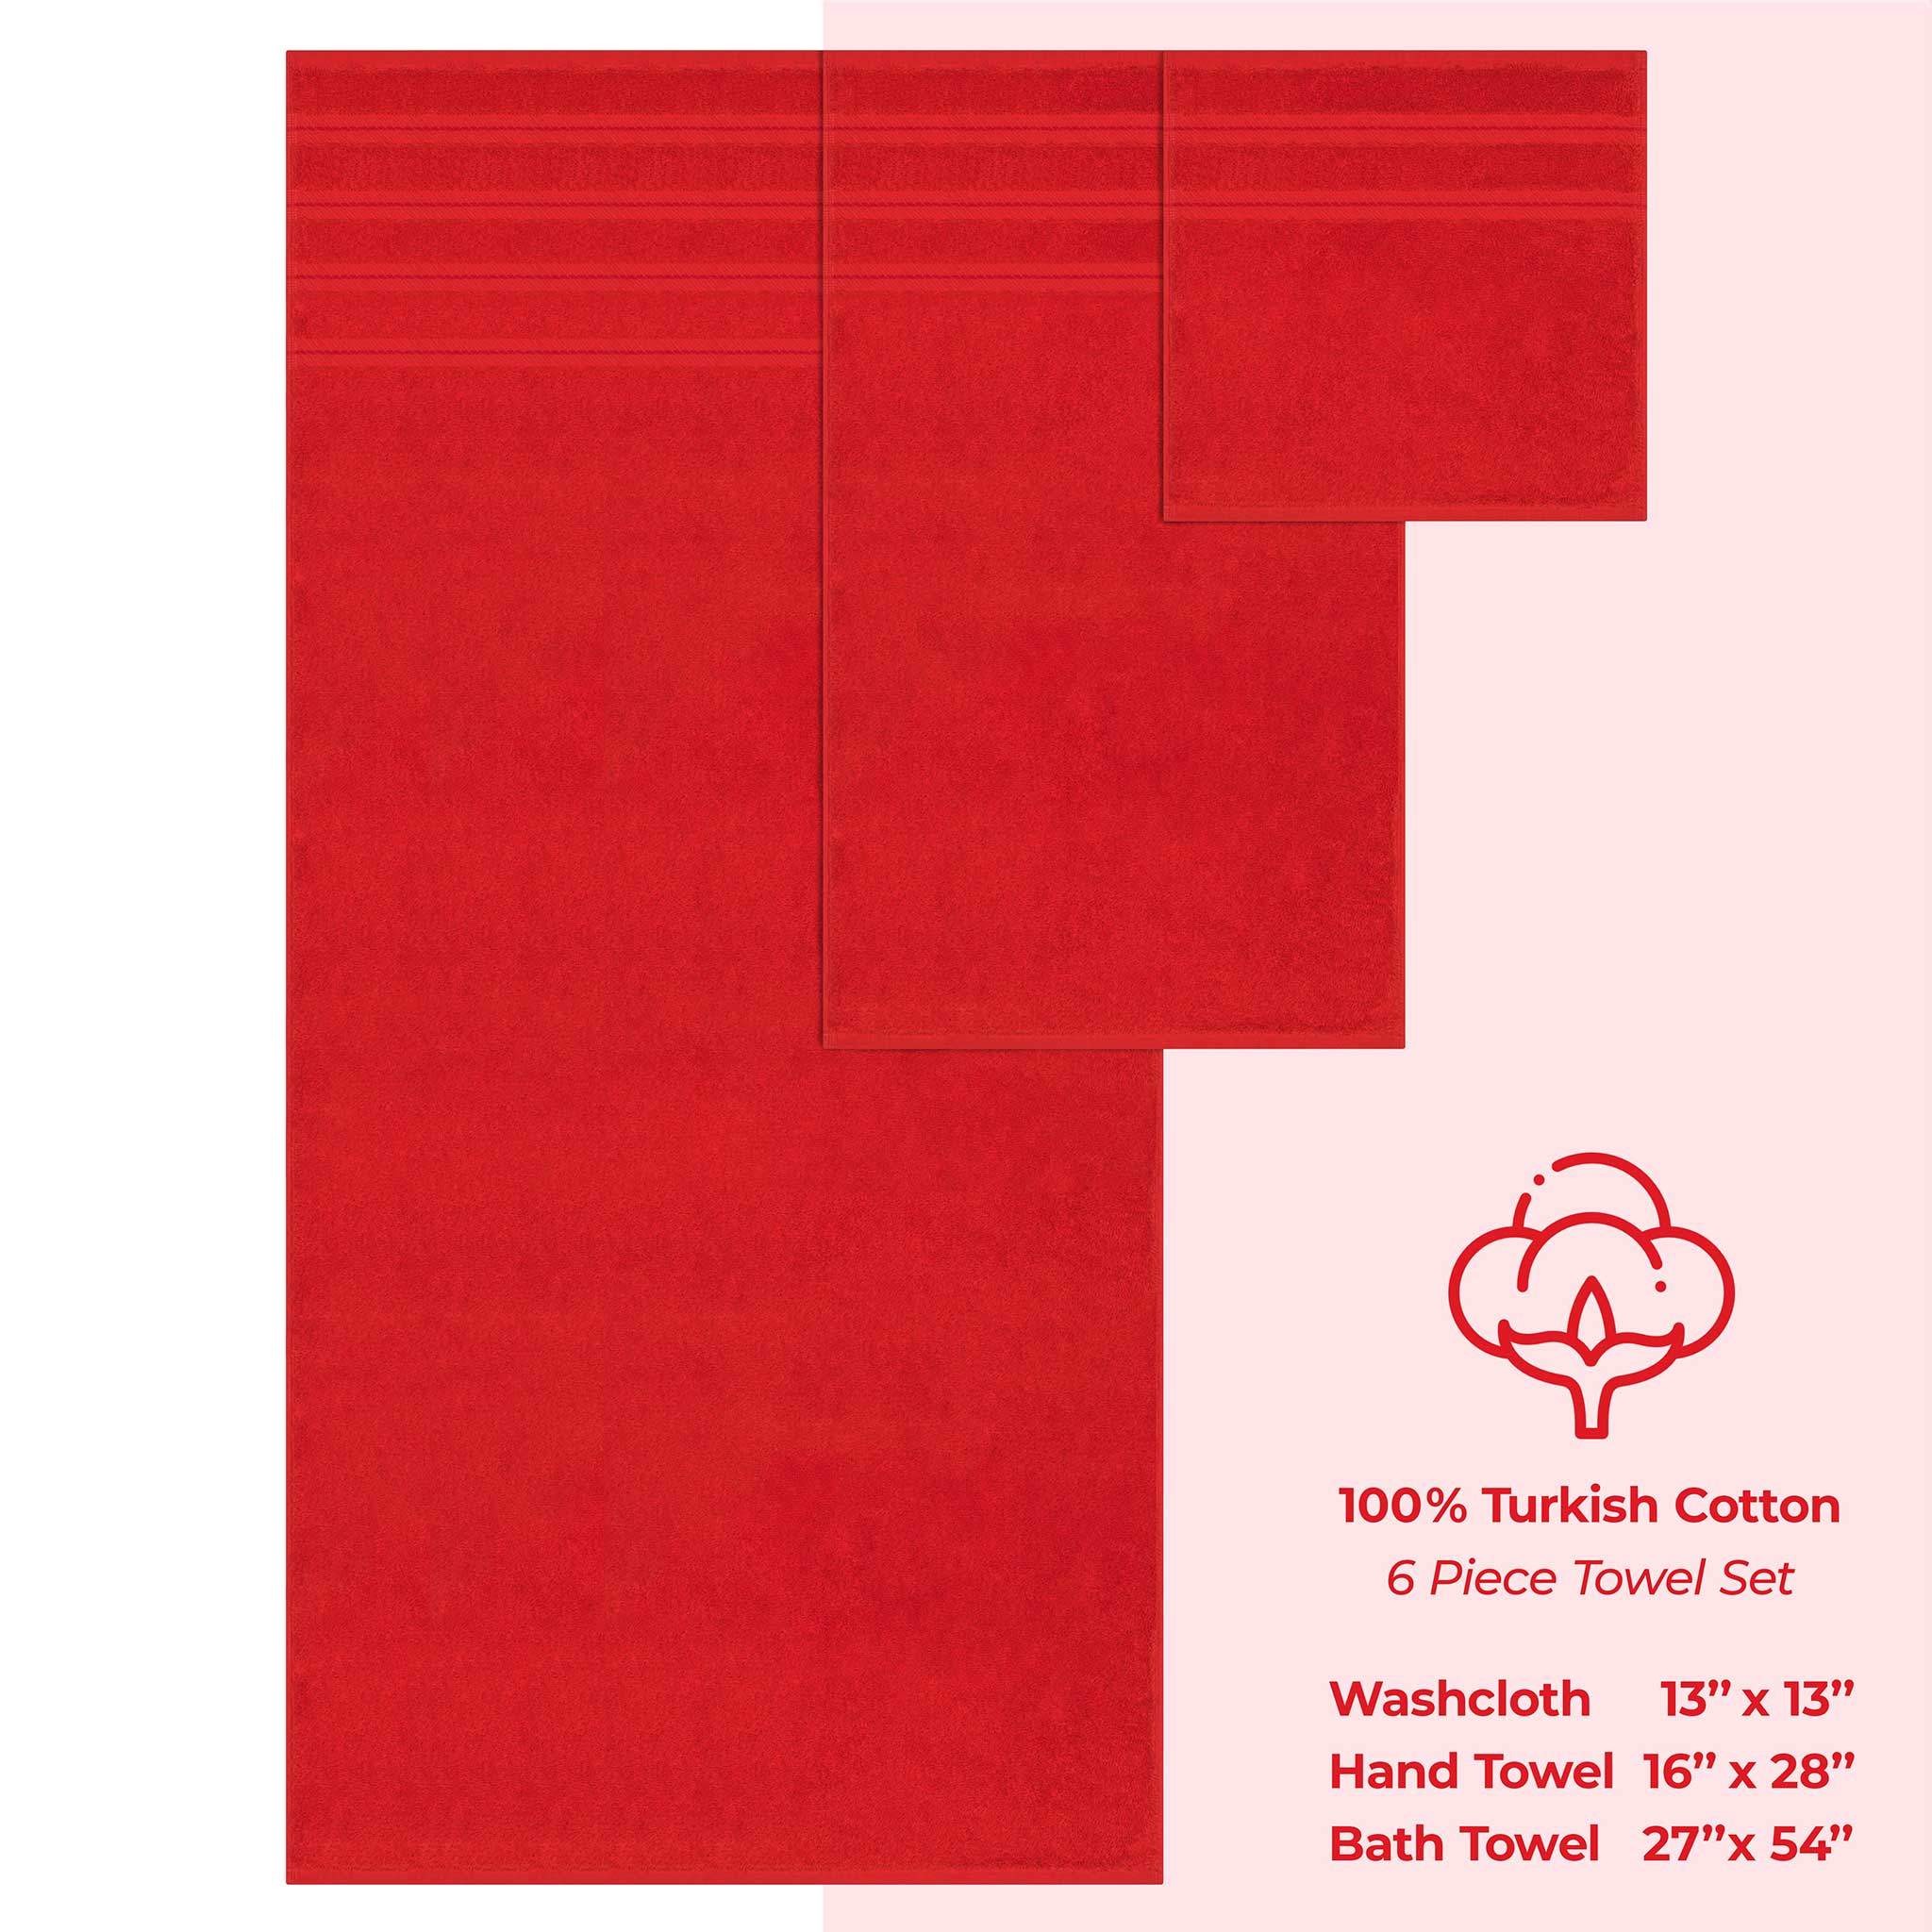 American Soft Linen - 6 Piece Turkish Cotton Bath Towel Set - Red - 4